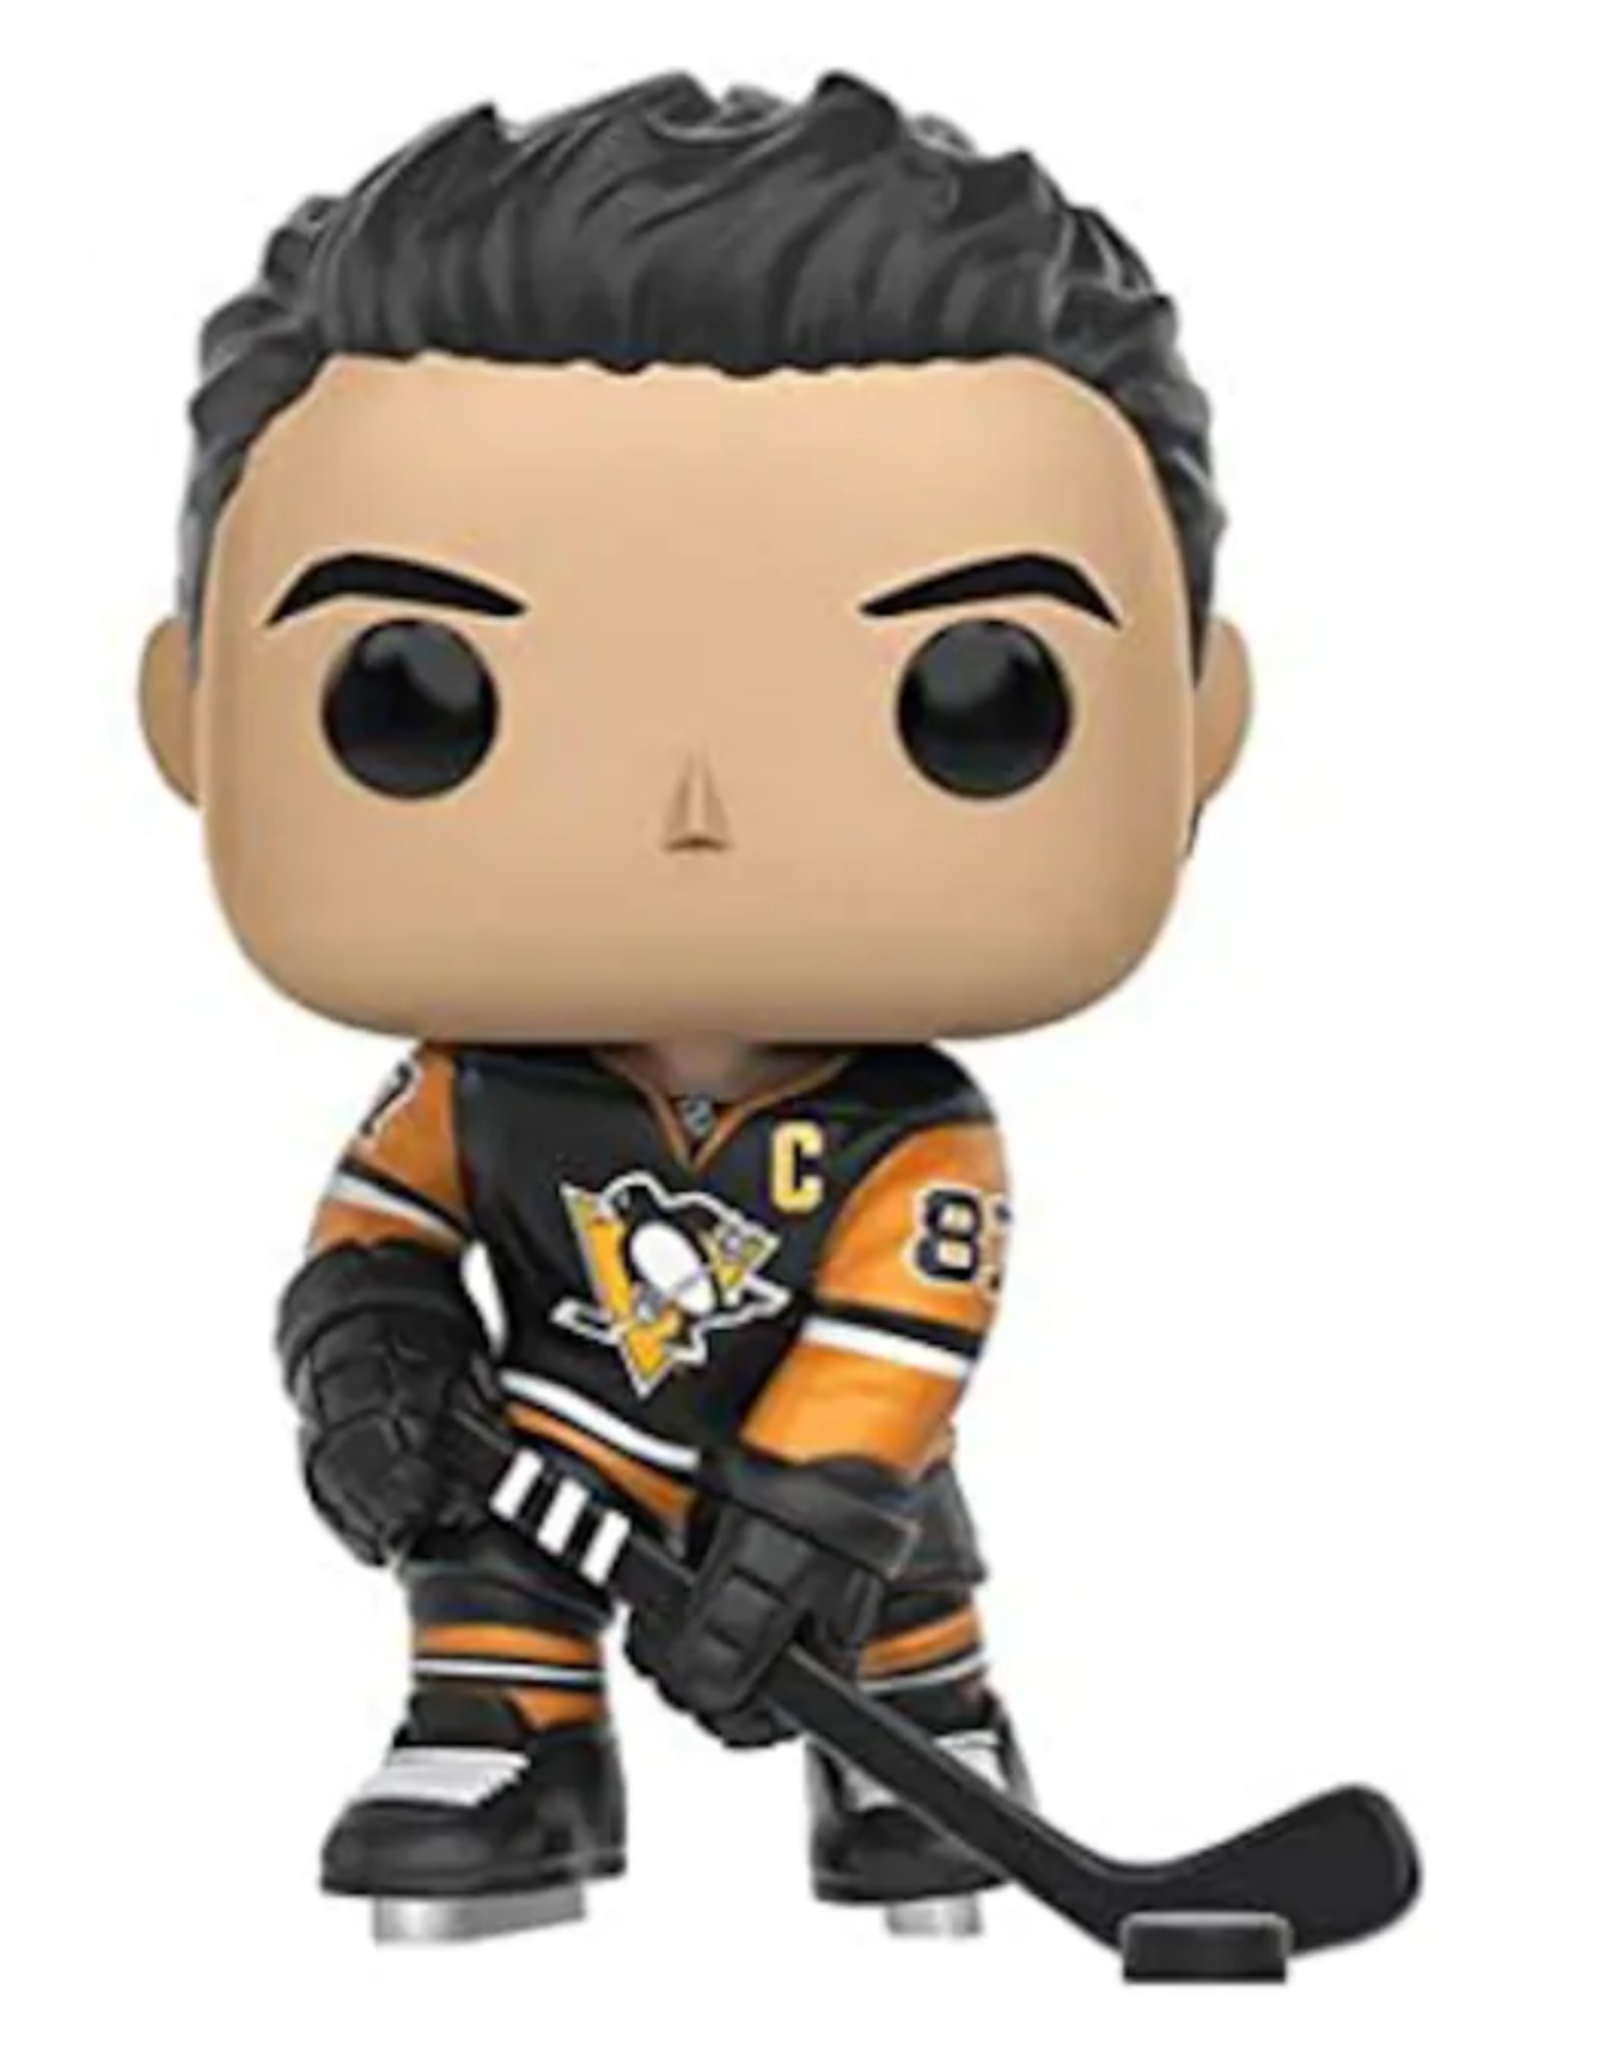 Funko POP! Figure Crosby Pittsburgh Penguins Black